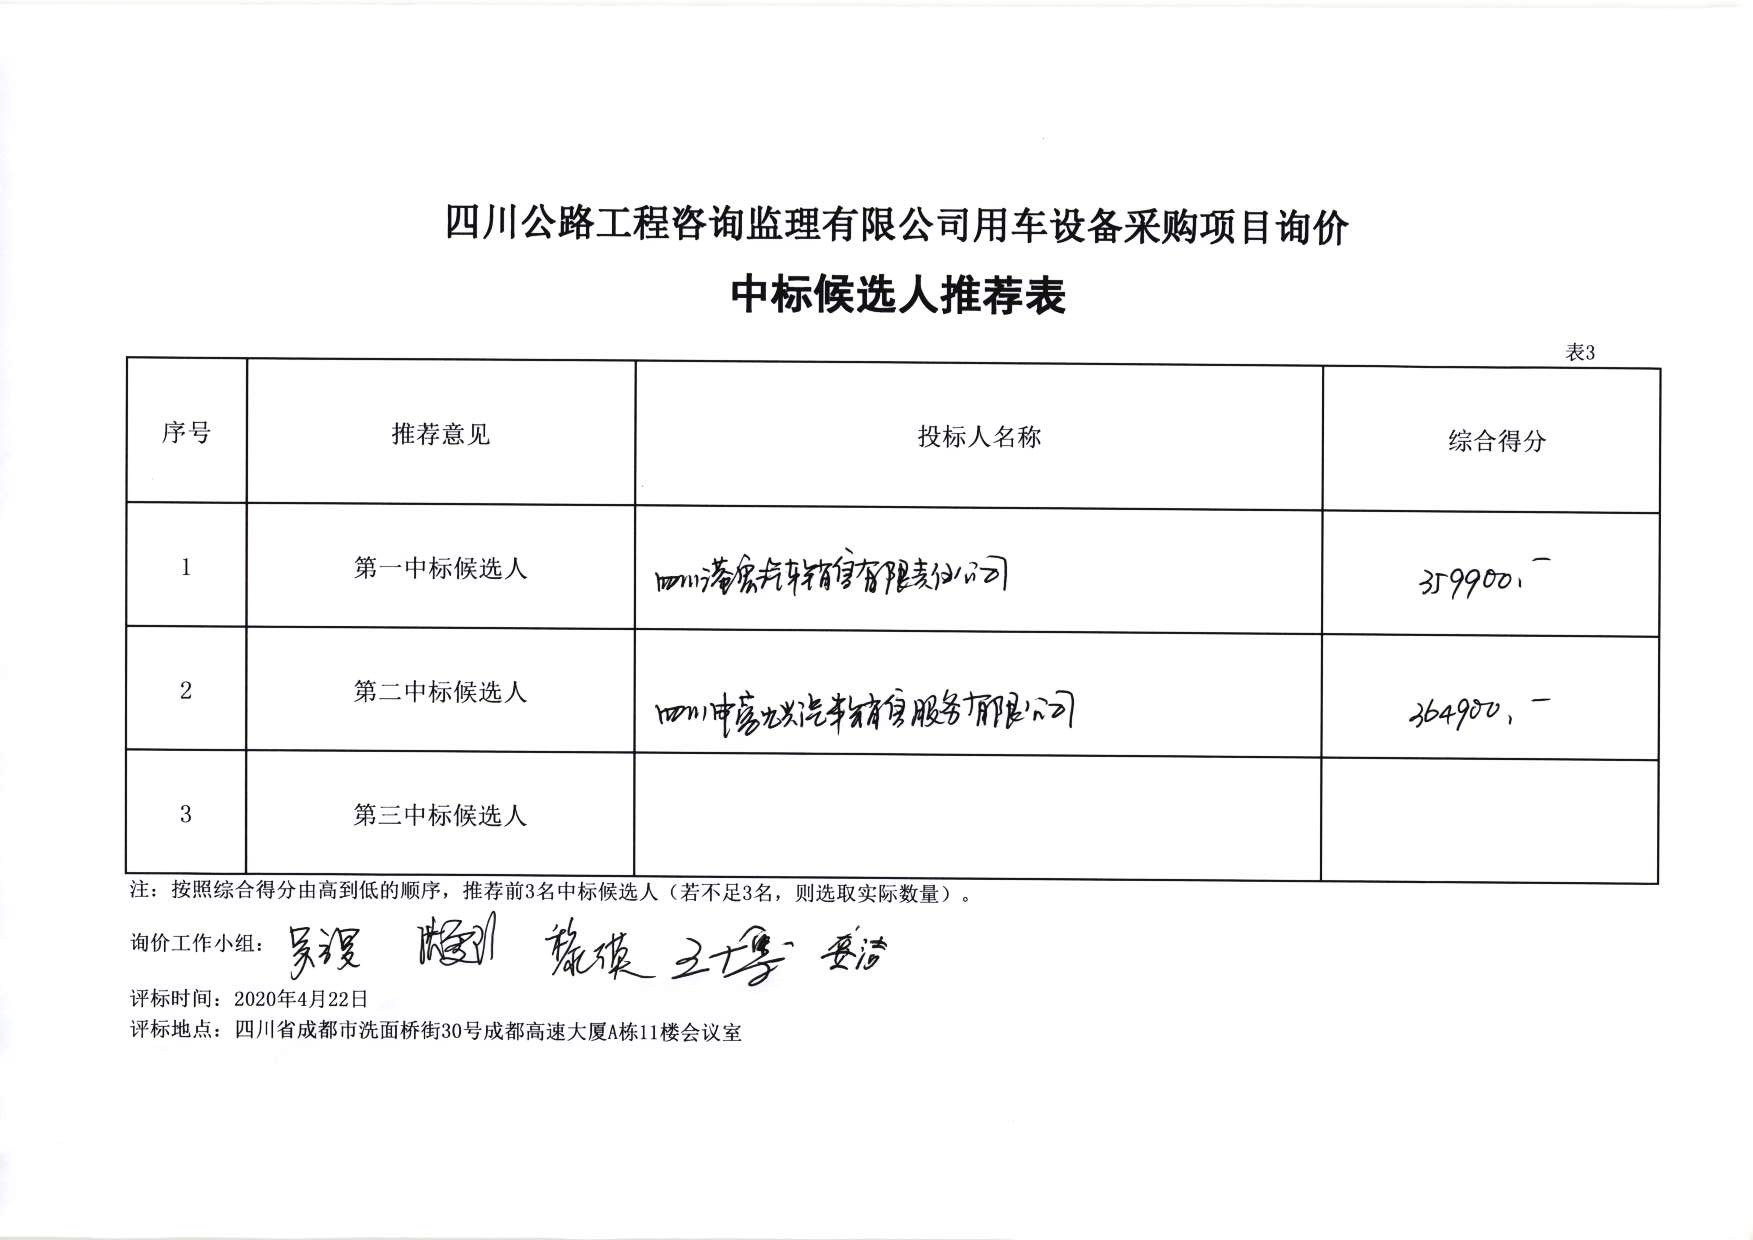 ld乐动·体育（中国）官方网站用车设备采购项目询价中标候选人推荐表.jpg